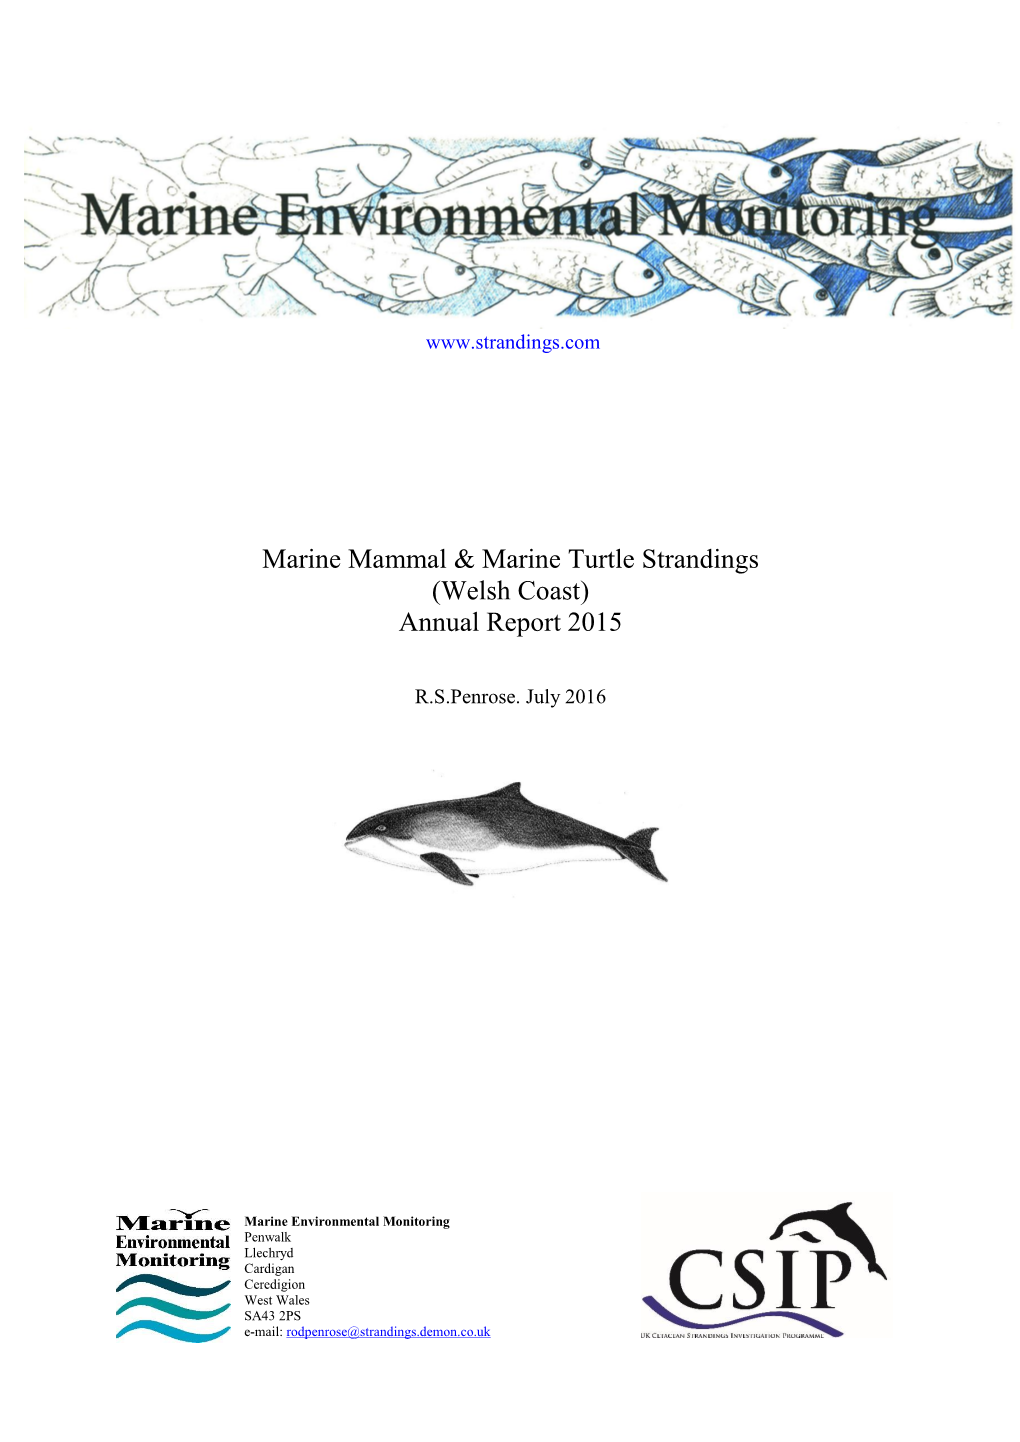 2015 Marine Mammal Strandings Annual Report